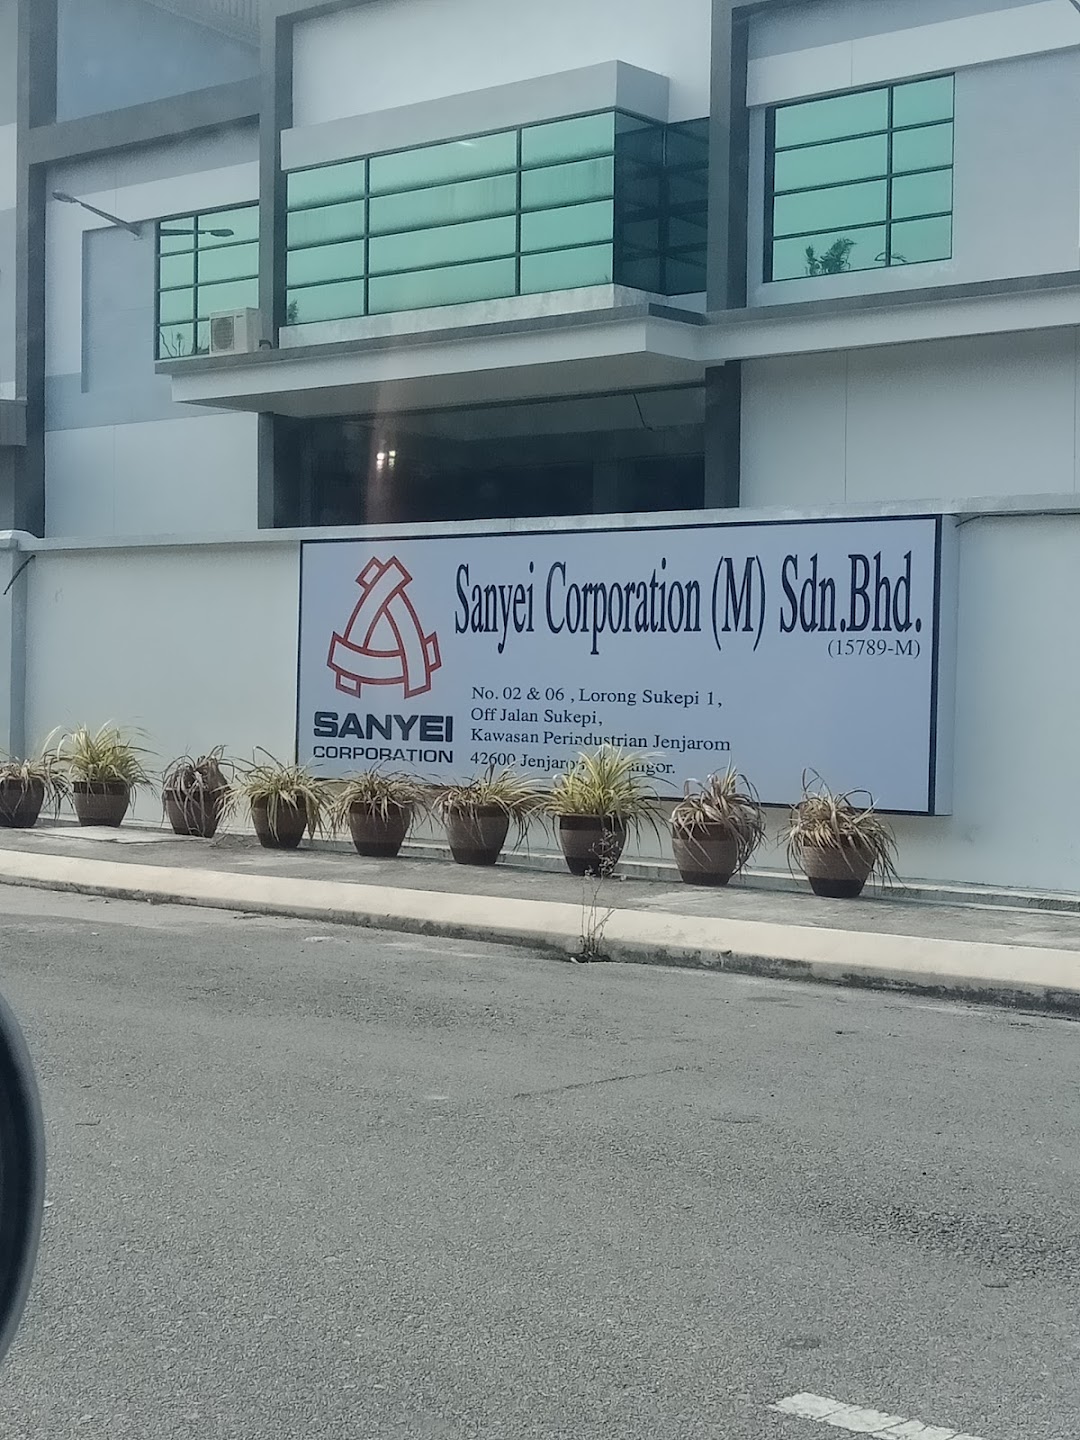 Sanyei Corporation (M) Sdn. Bhd.